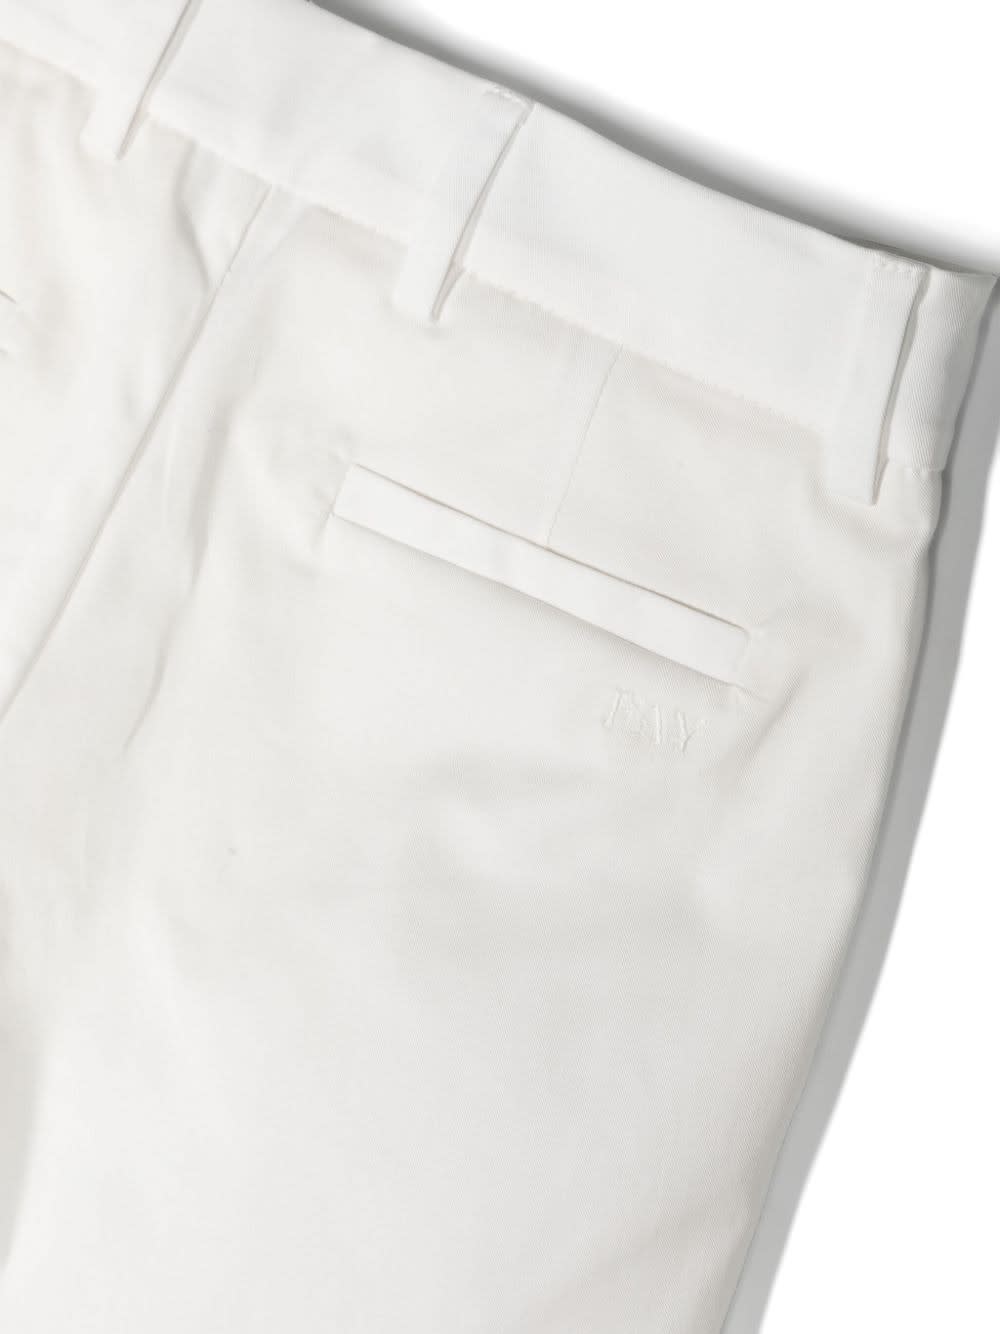 Shop Fay White Cotton Blend Tailored Bermuda Shorts